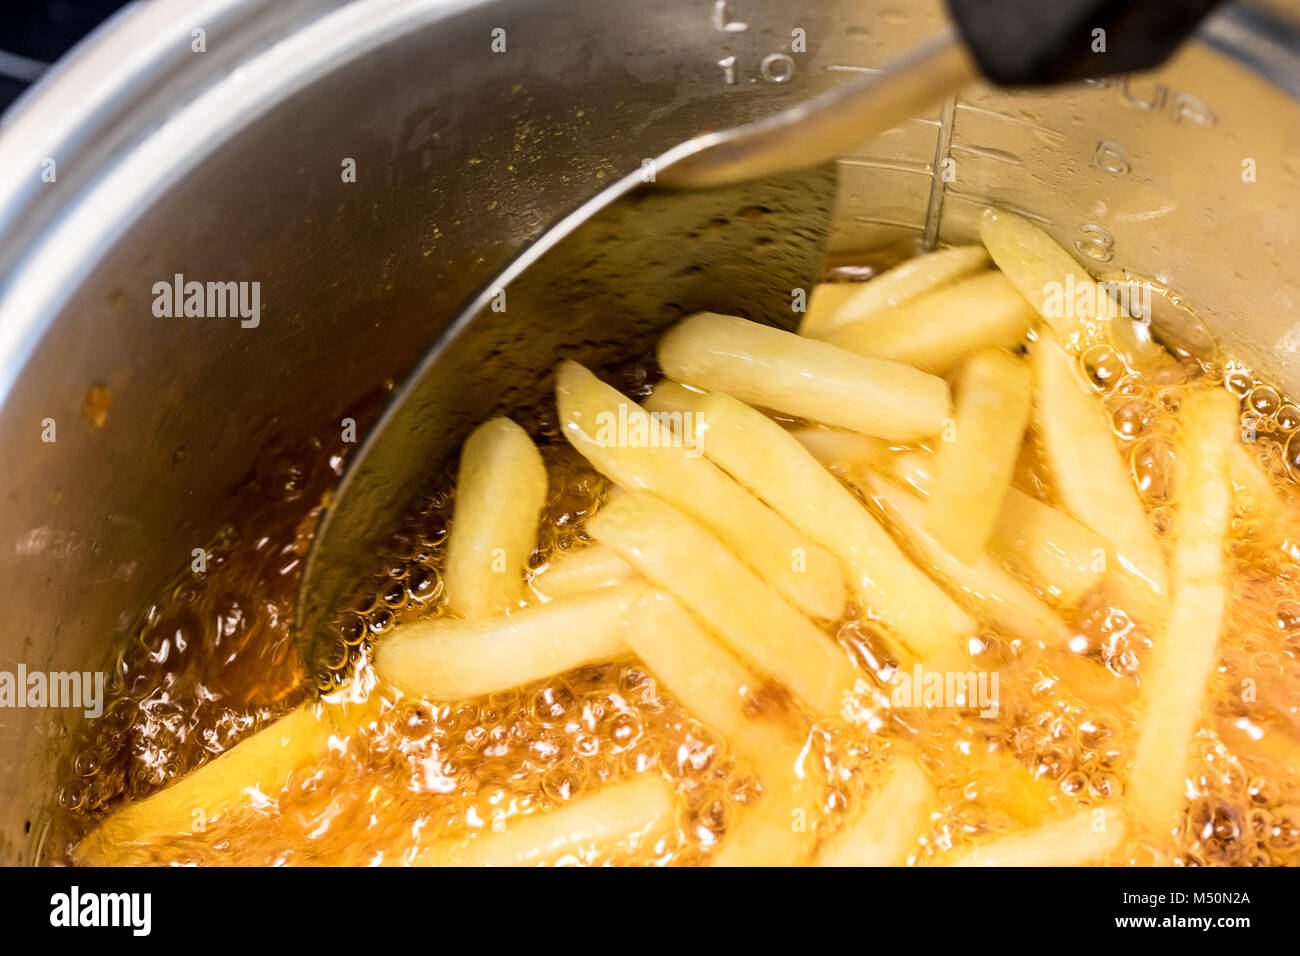 Pommes frites in den Topf, aus der Nähe. Bratkartoffeln in Öl  Stockfotografie - Alamy